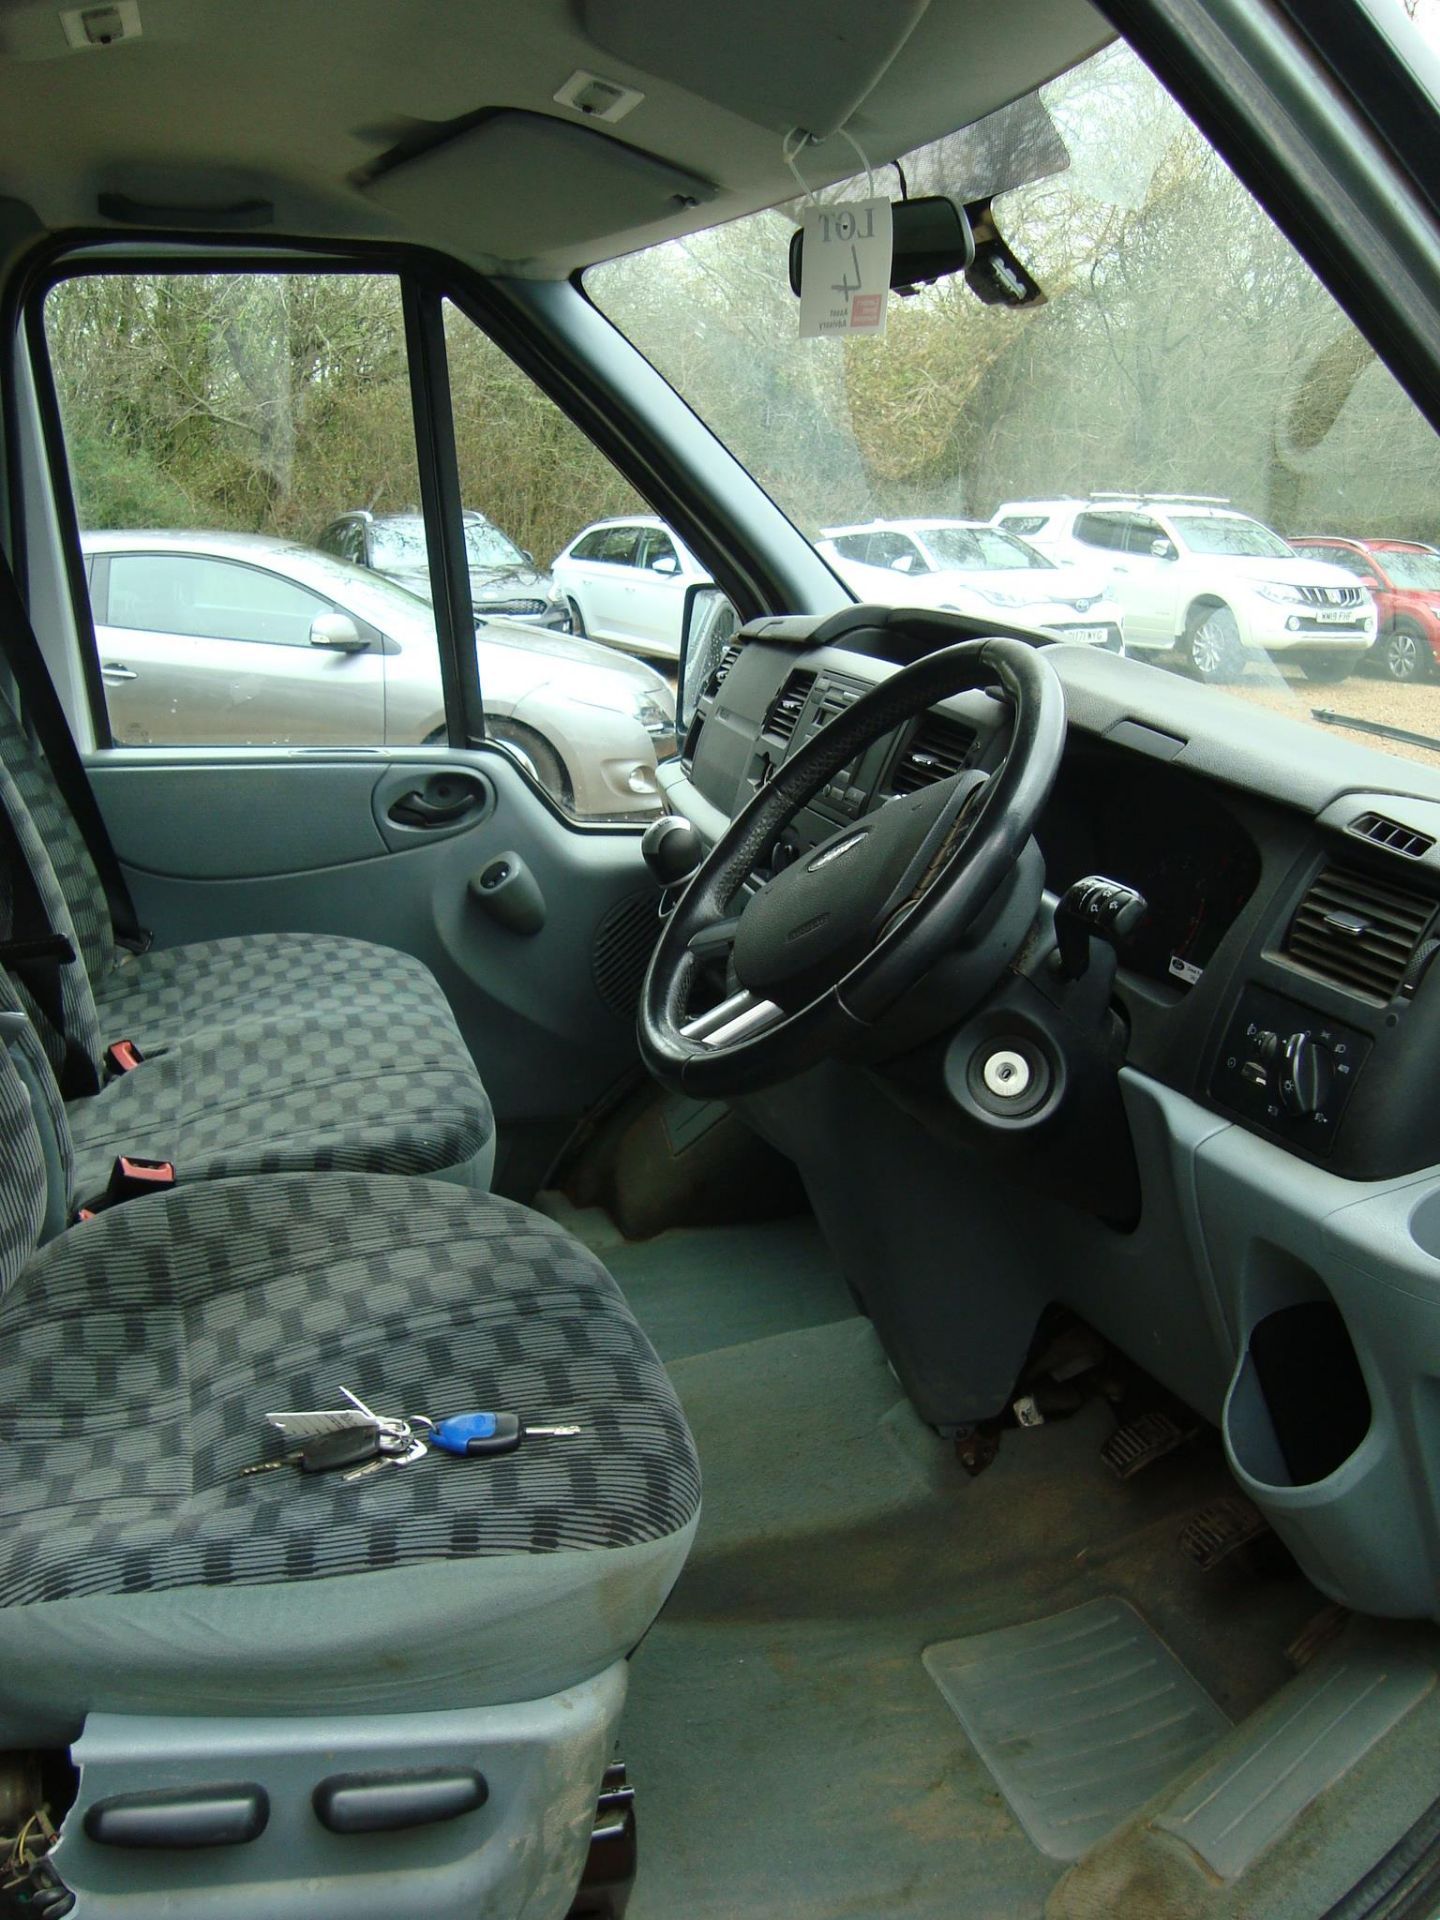 Ford Transit 125 T280 Trend 2.2 diesel nine seat minibus - Image 8 of 11